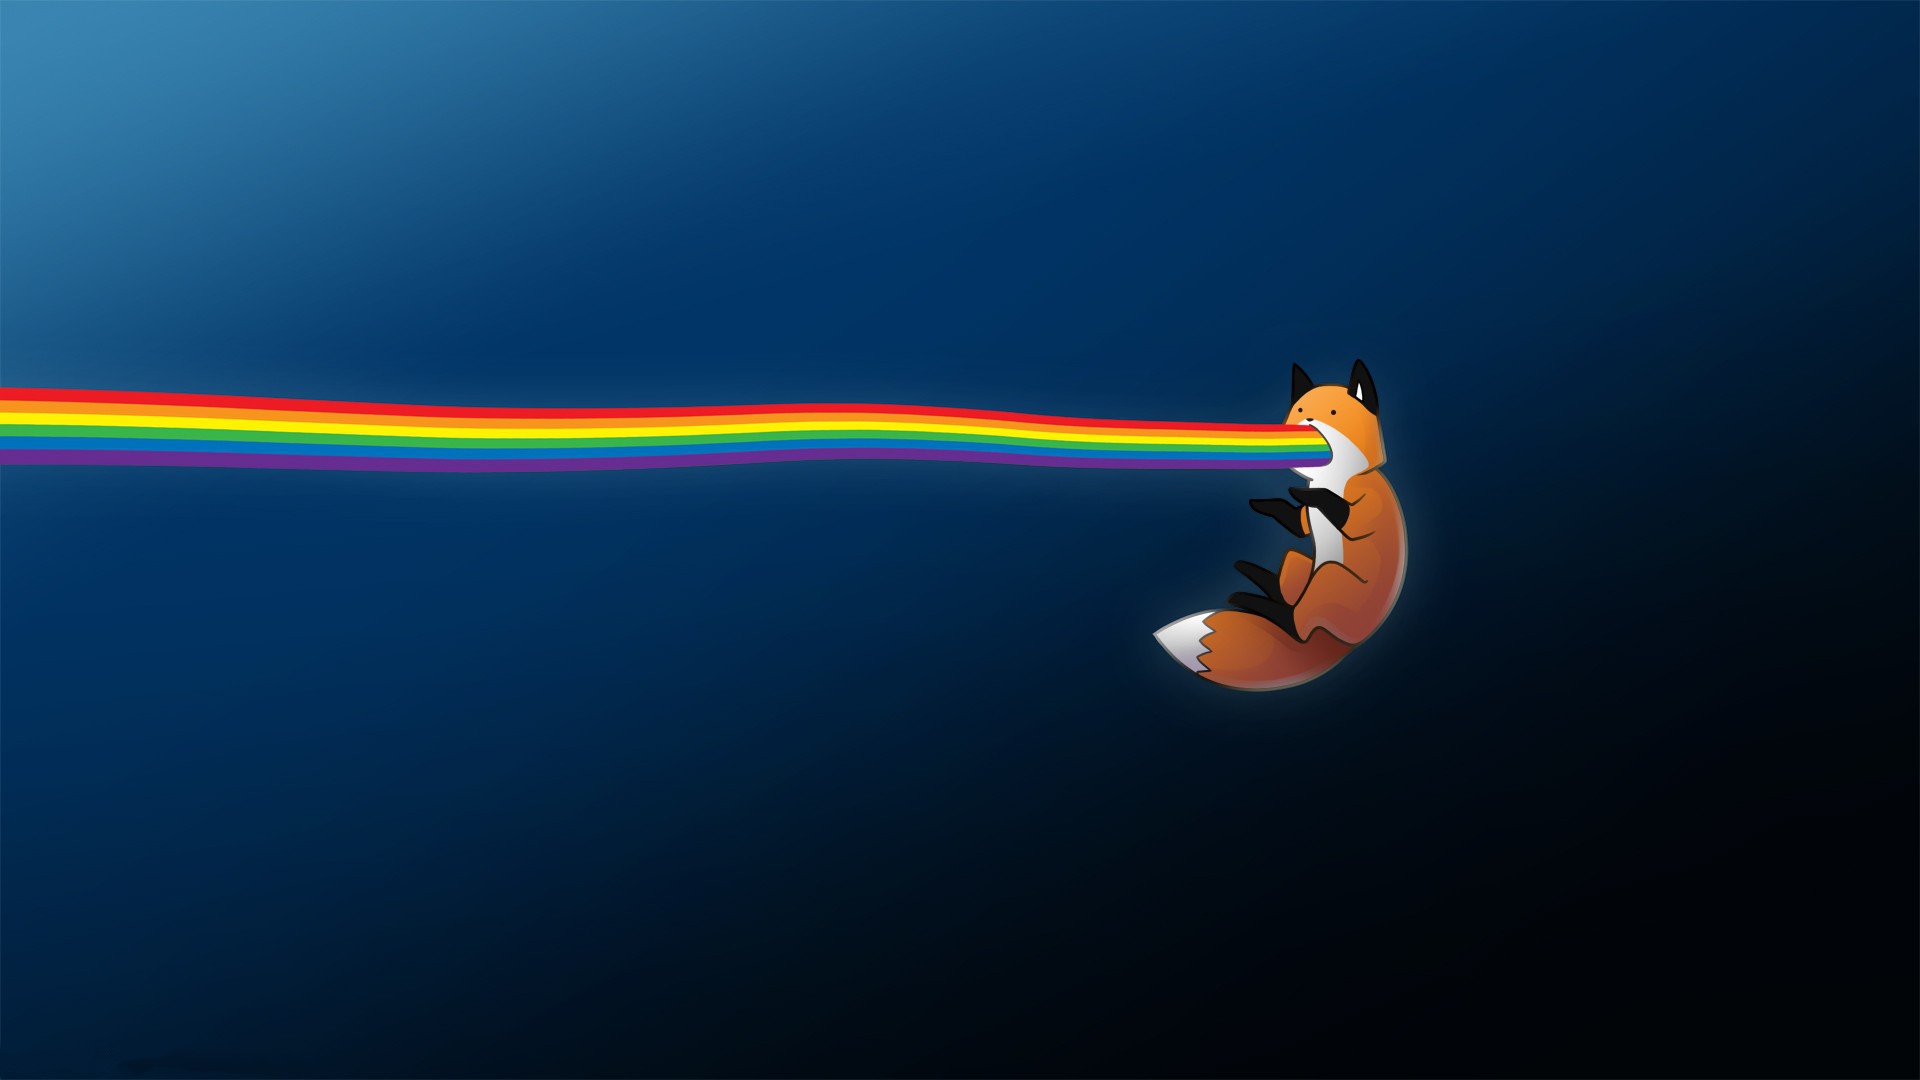 Nyan Cat Wallpaper Free Download